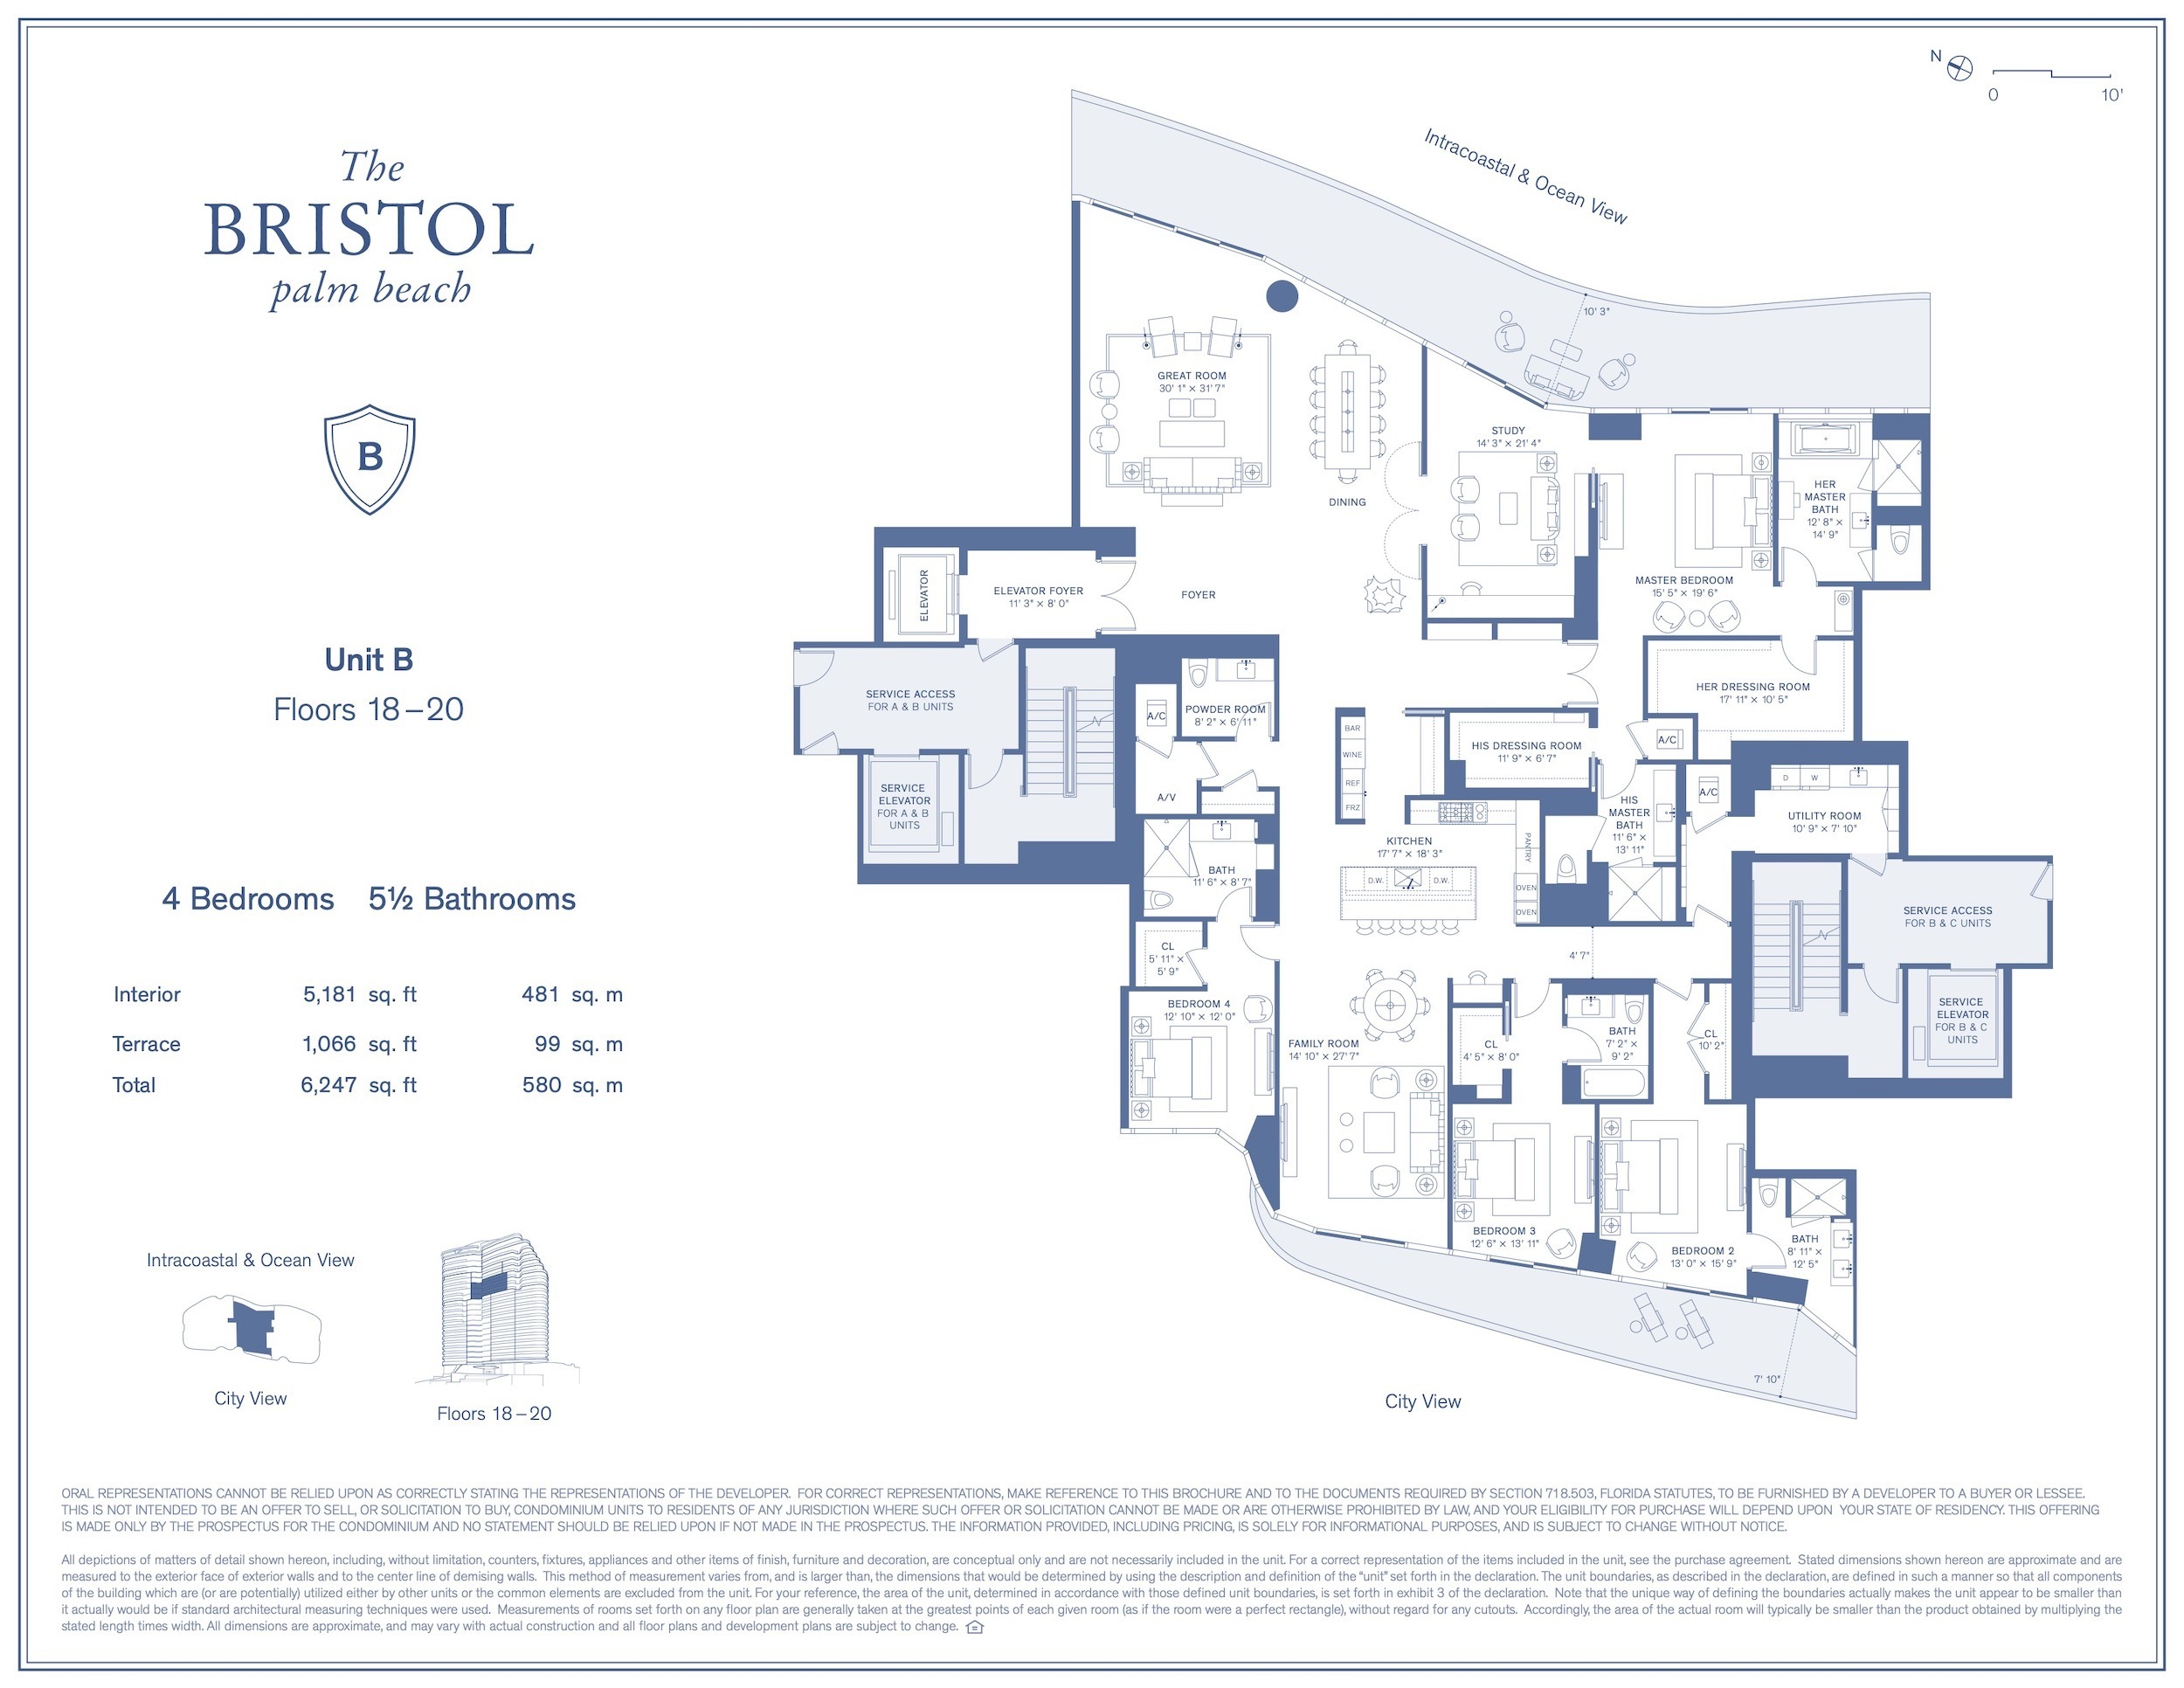 Floor Plan for The Bristol Palm Beach Floorplans, B Floors 18-20